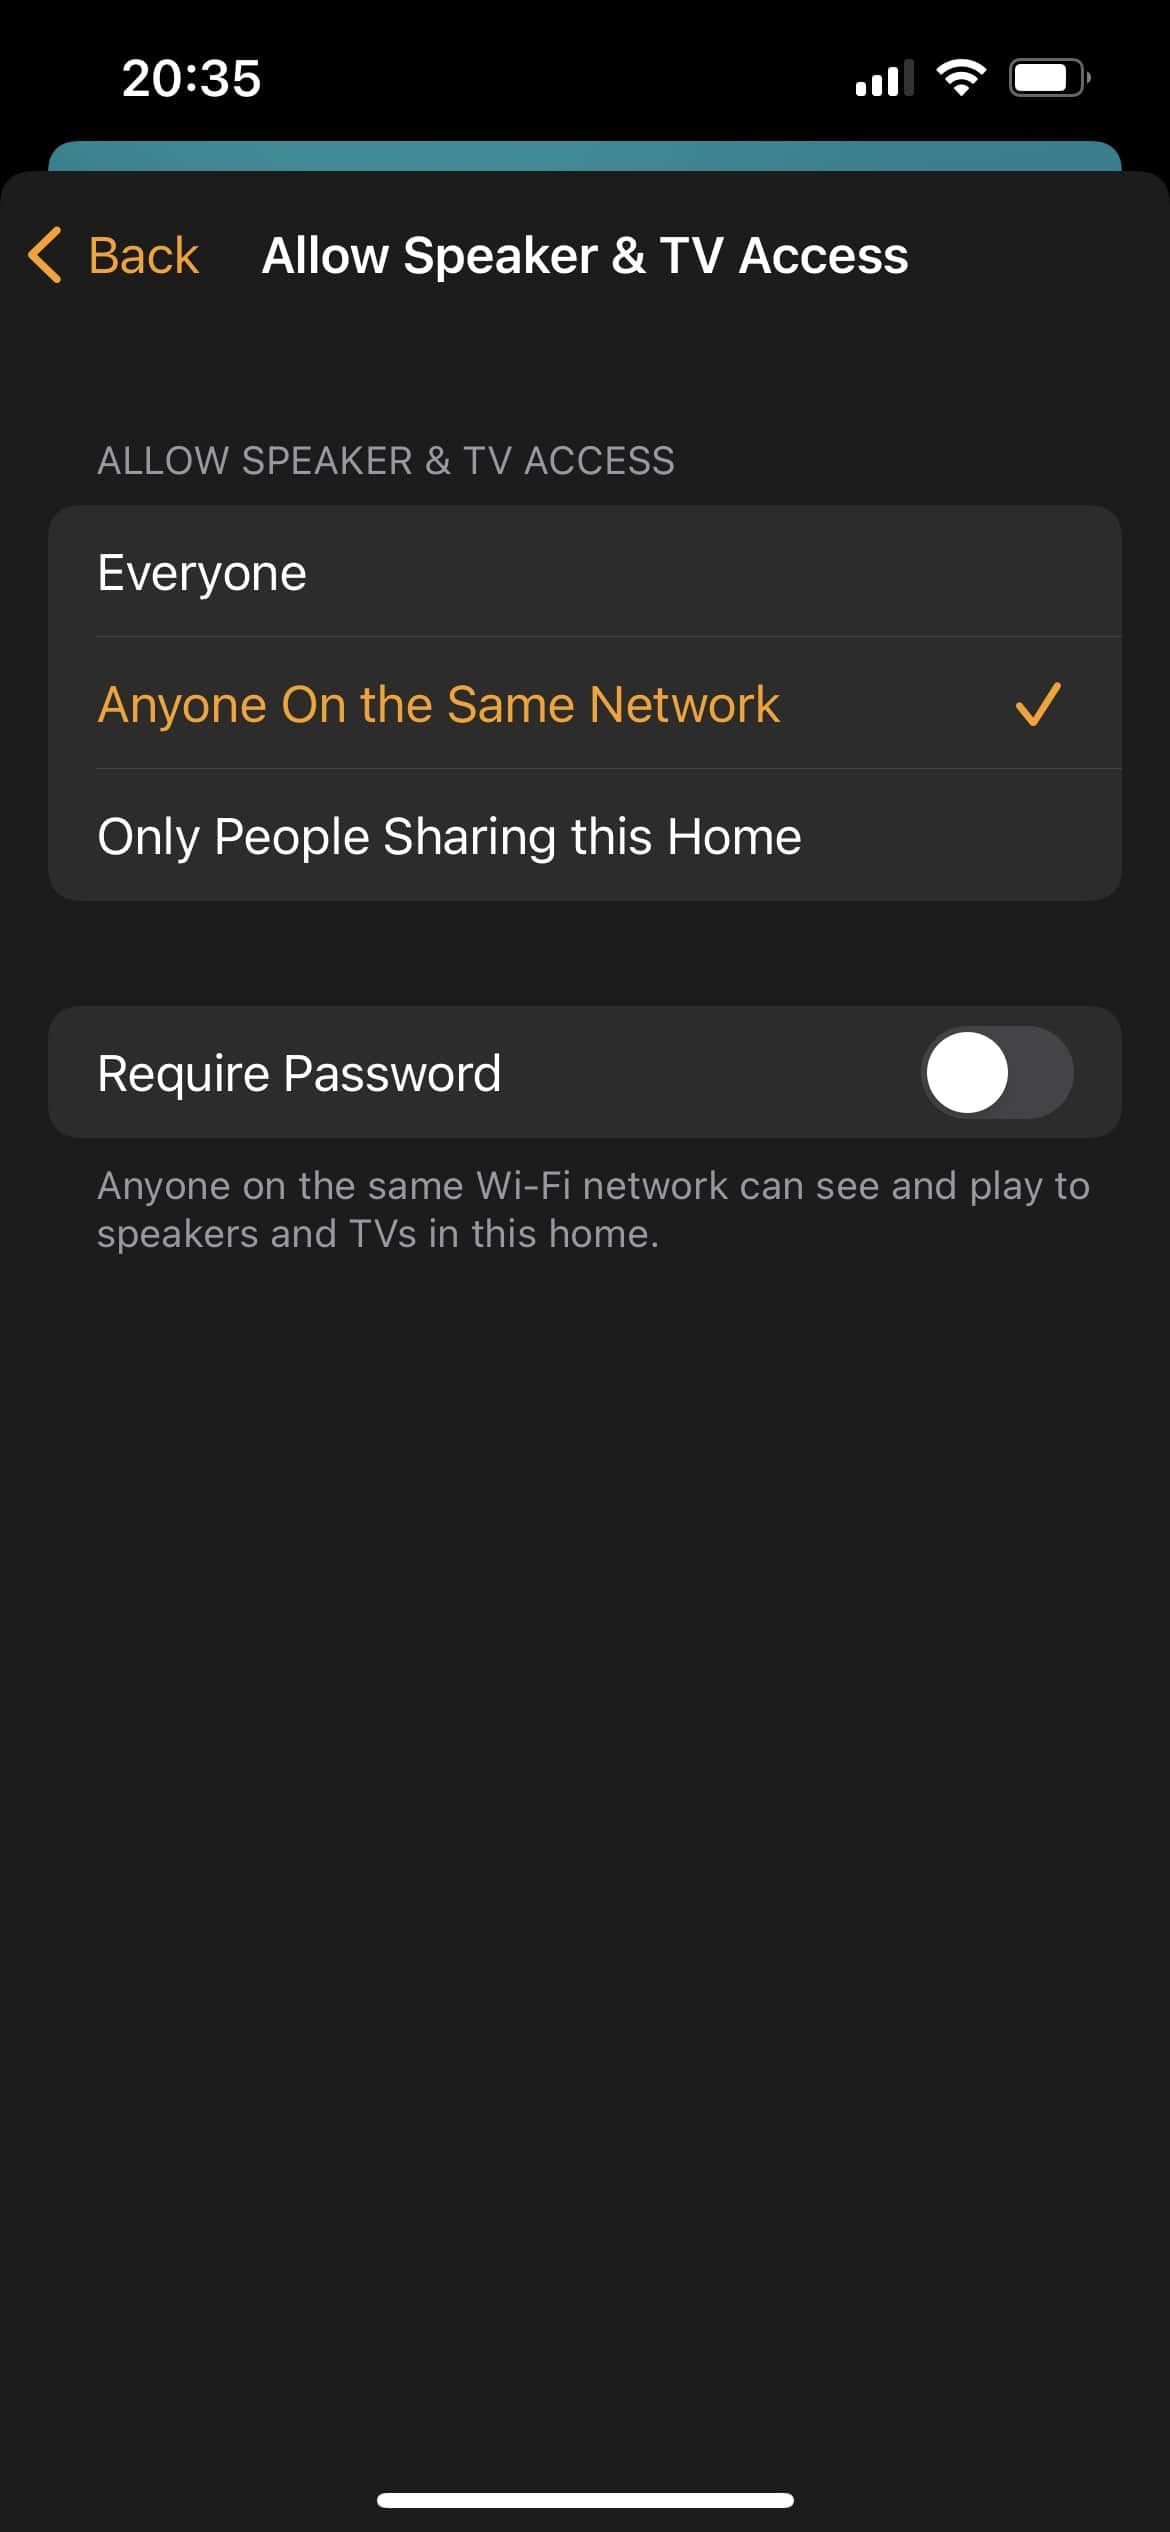 HomePod mini Allow Speaker & TV Access menu